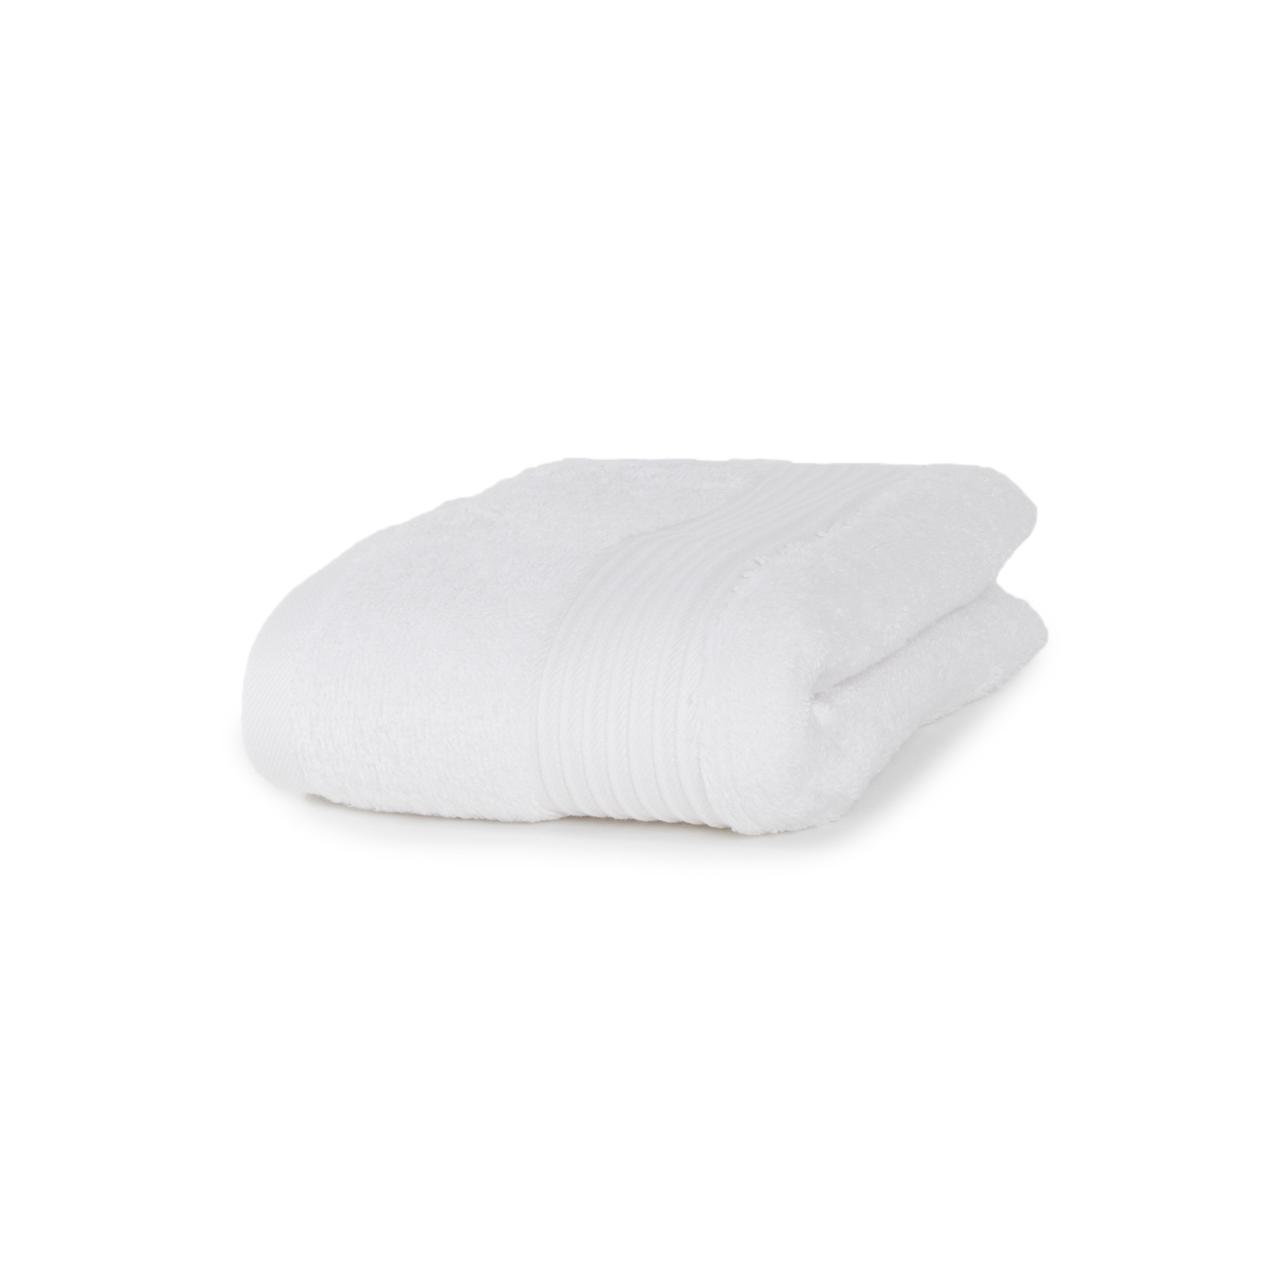 Bliss 100% Pima Cotton Hand Towel, White